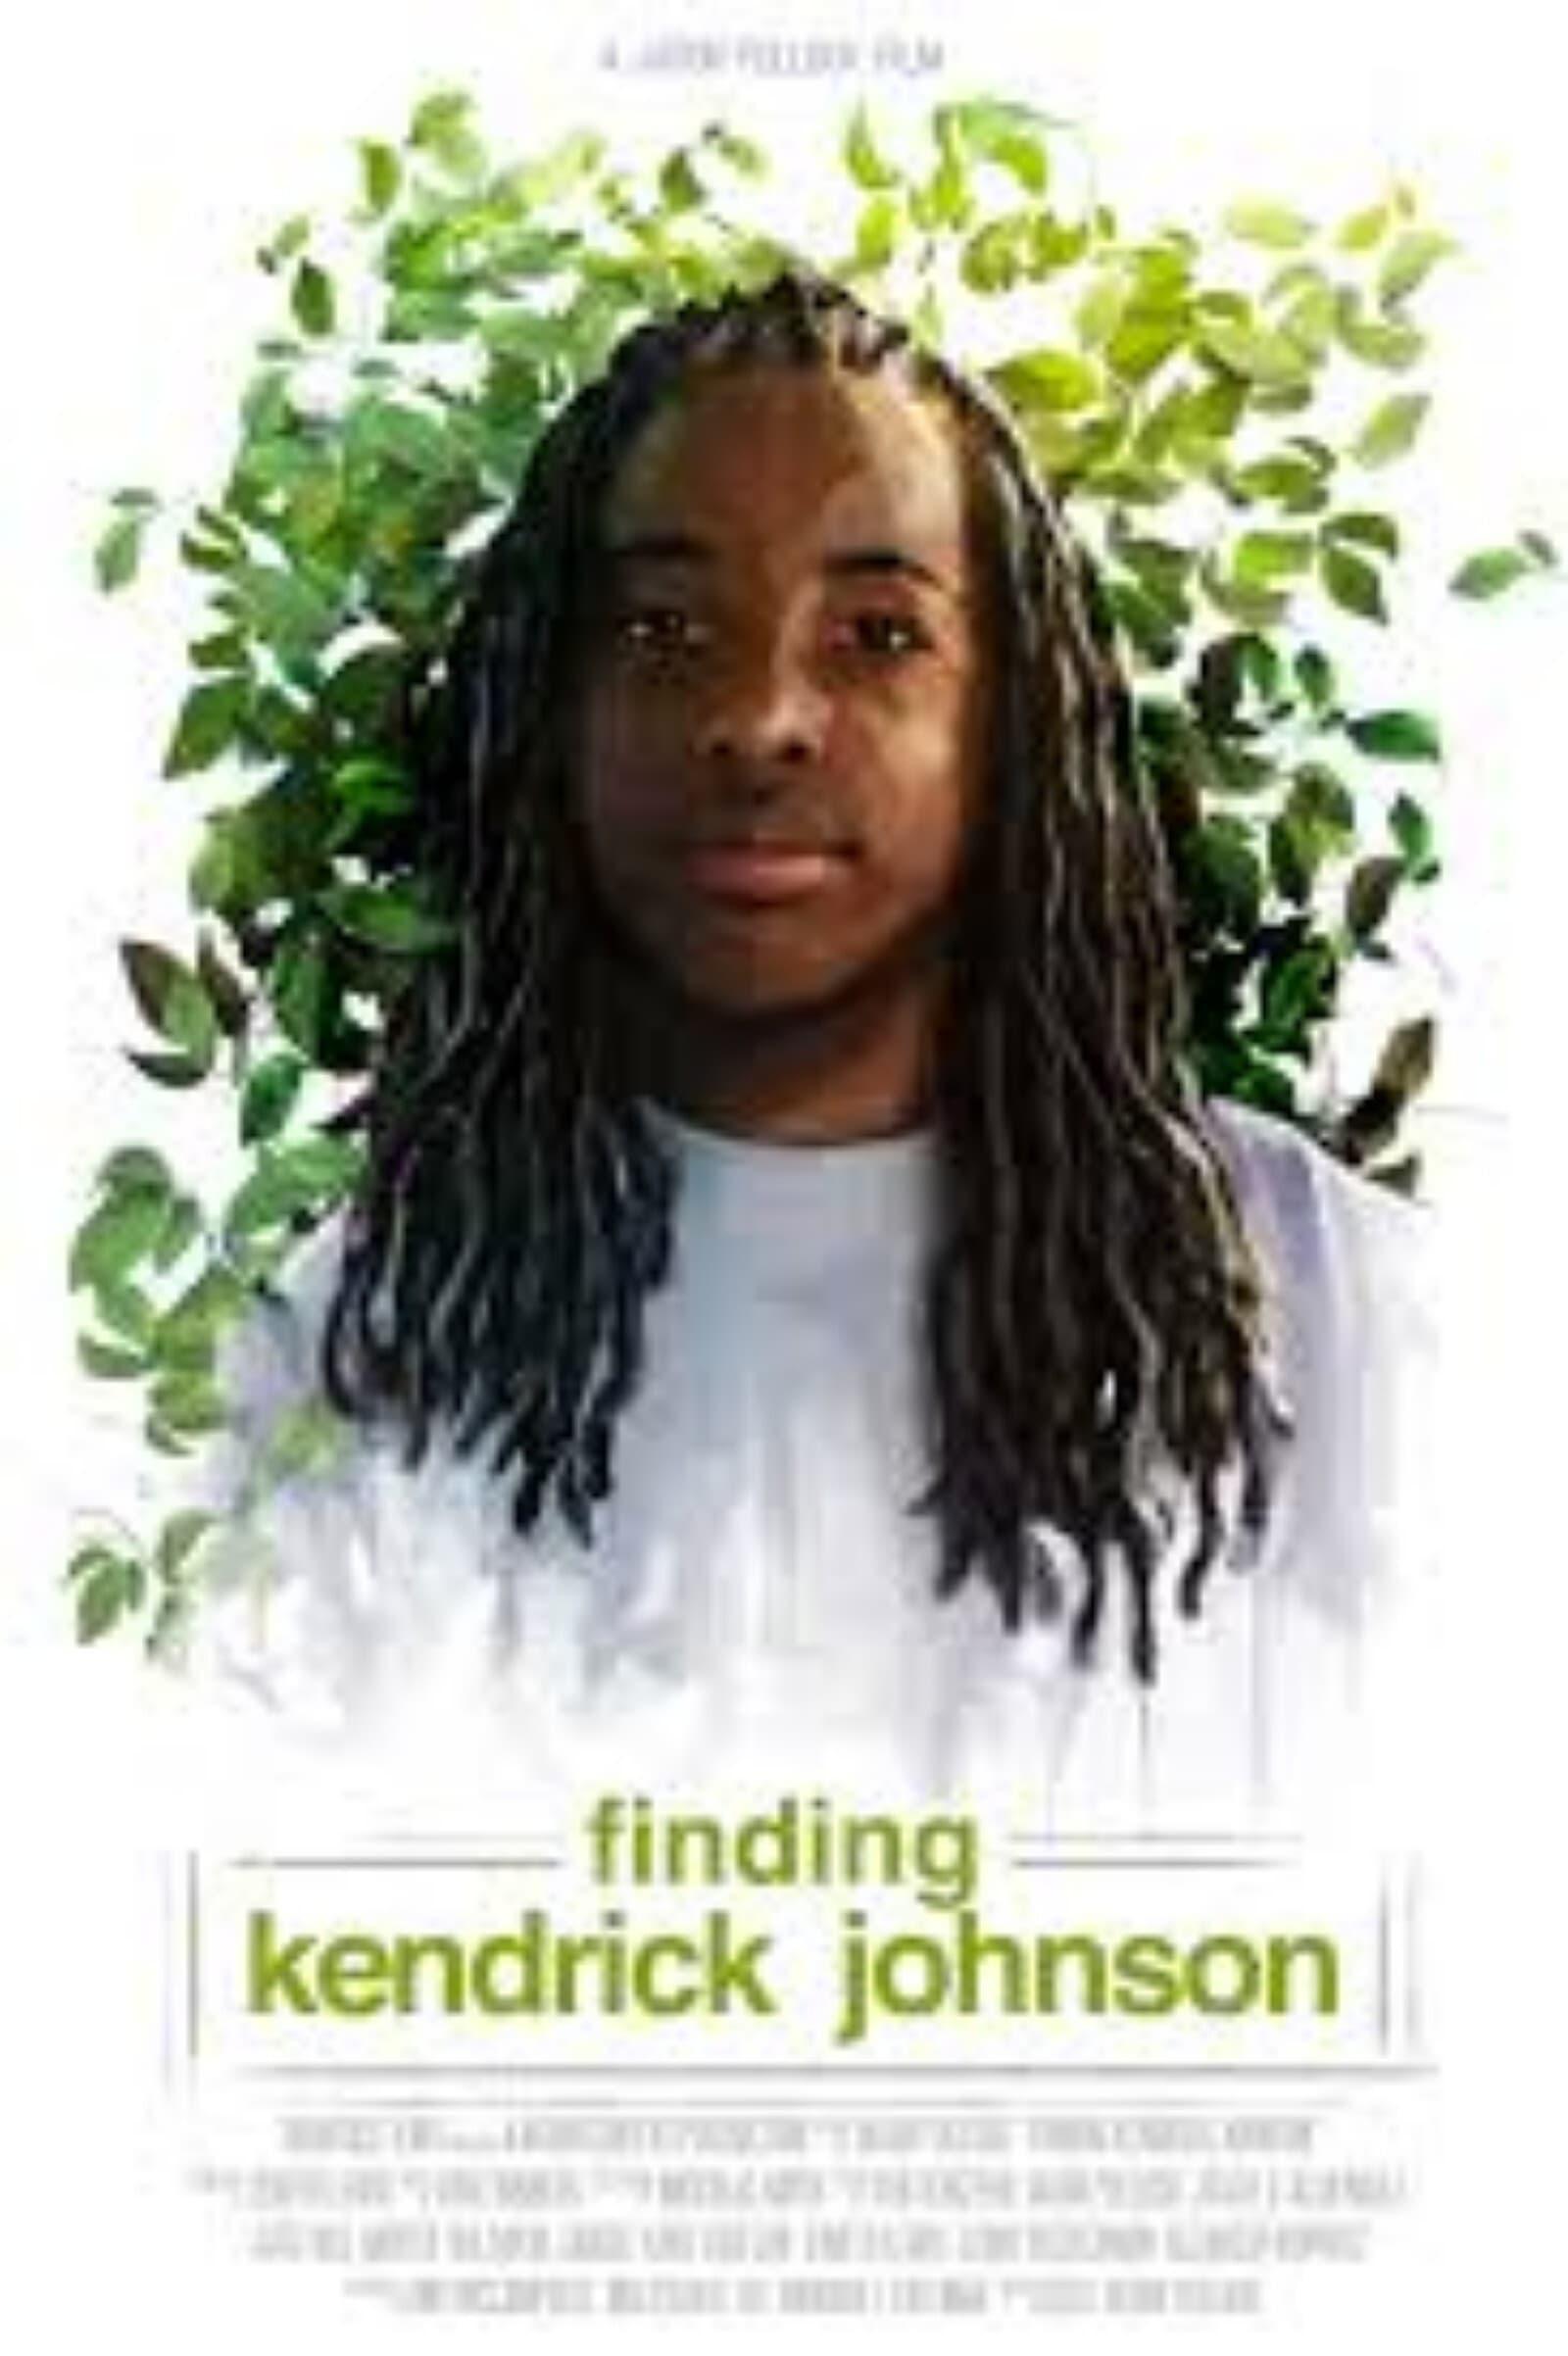 Finding Kendrick Johnson poster